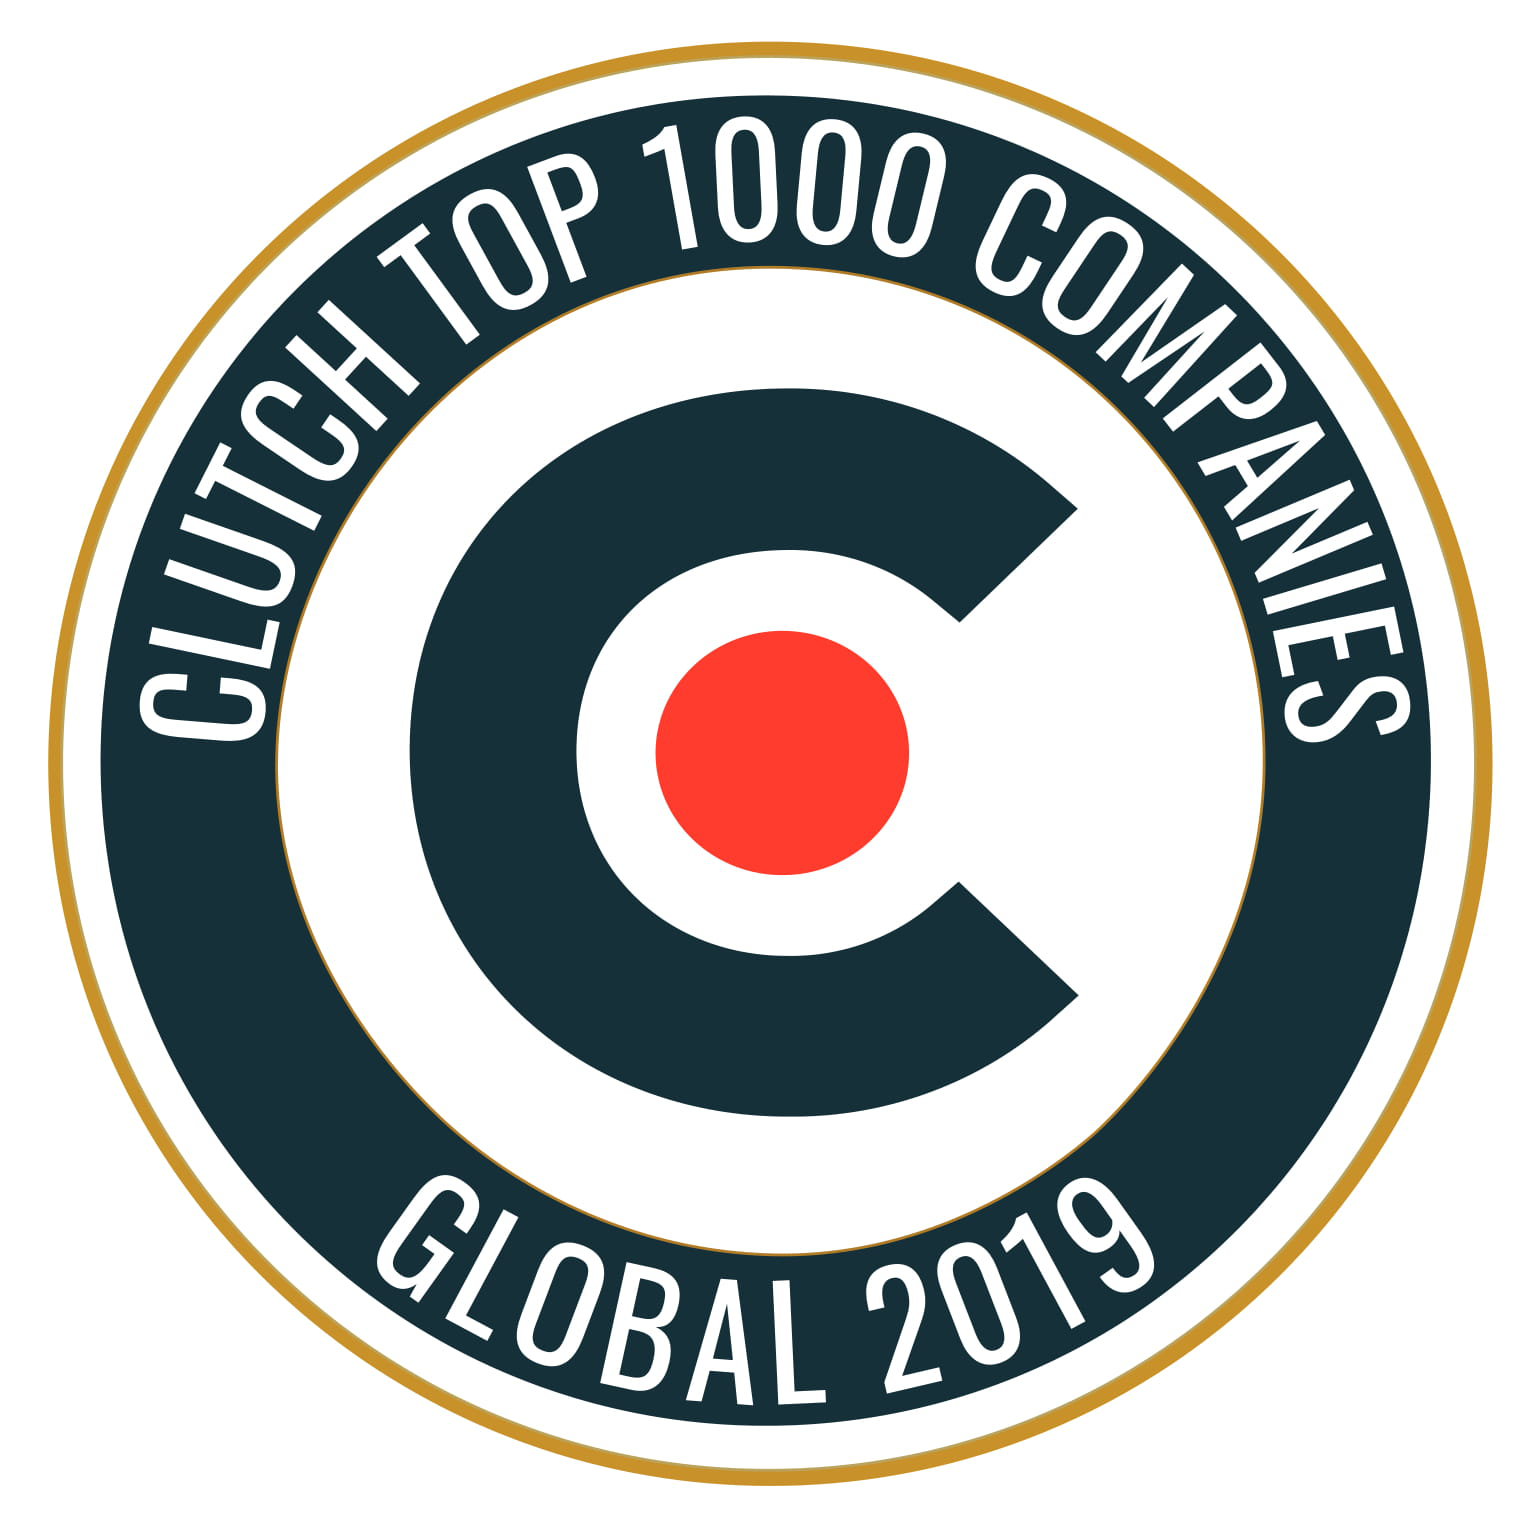 Cubix named a Clutch 1000 company!